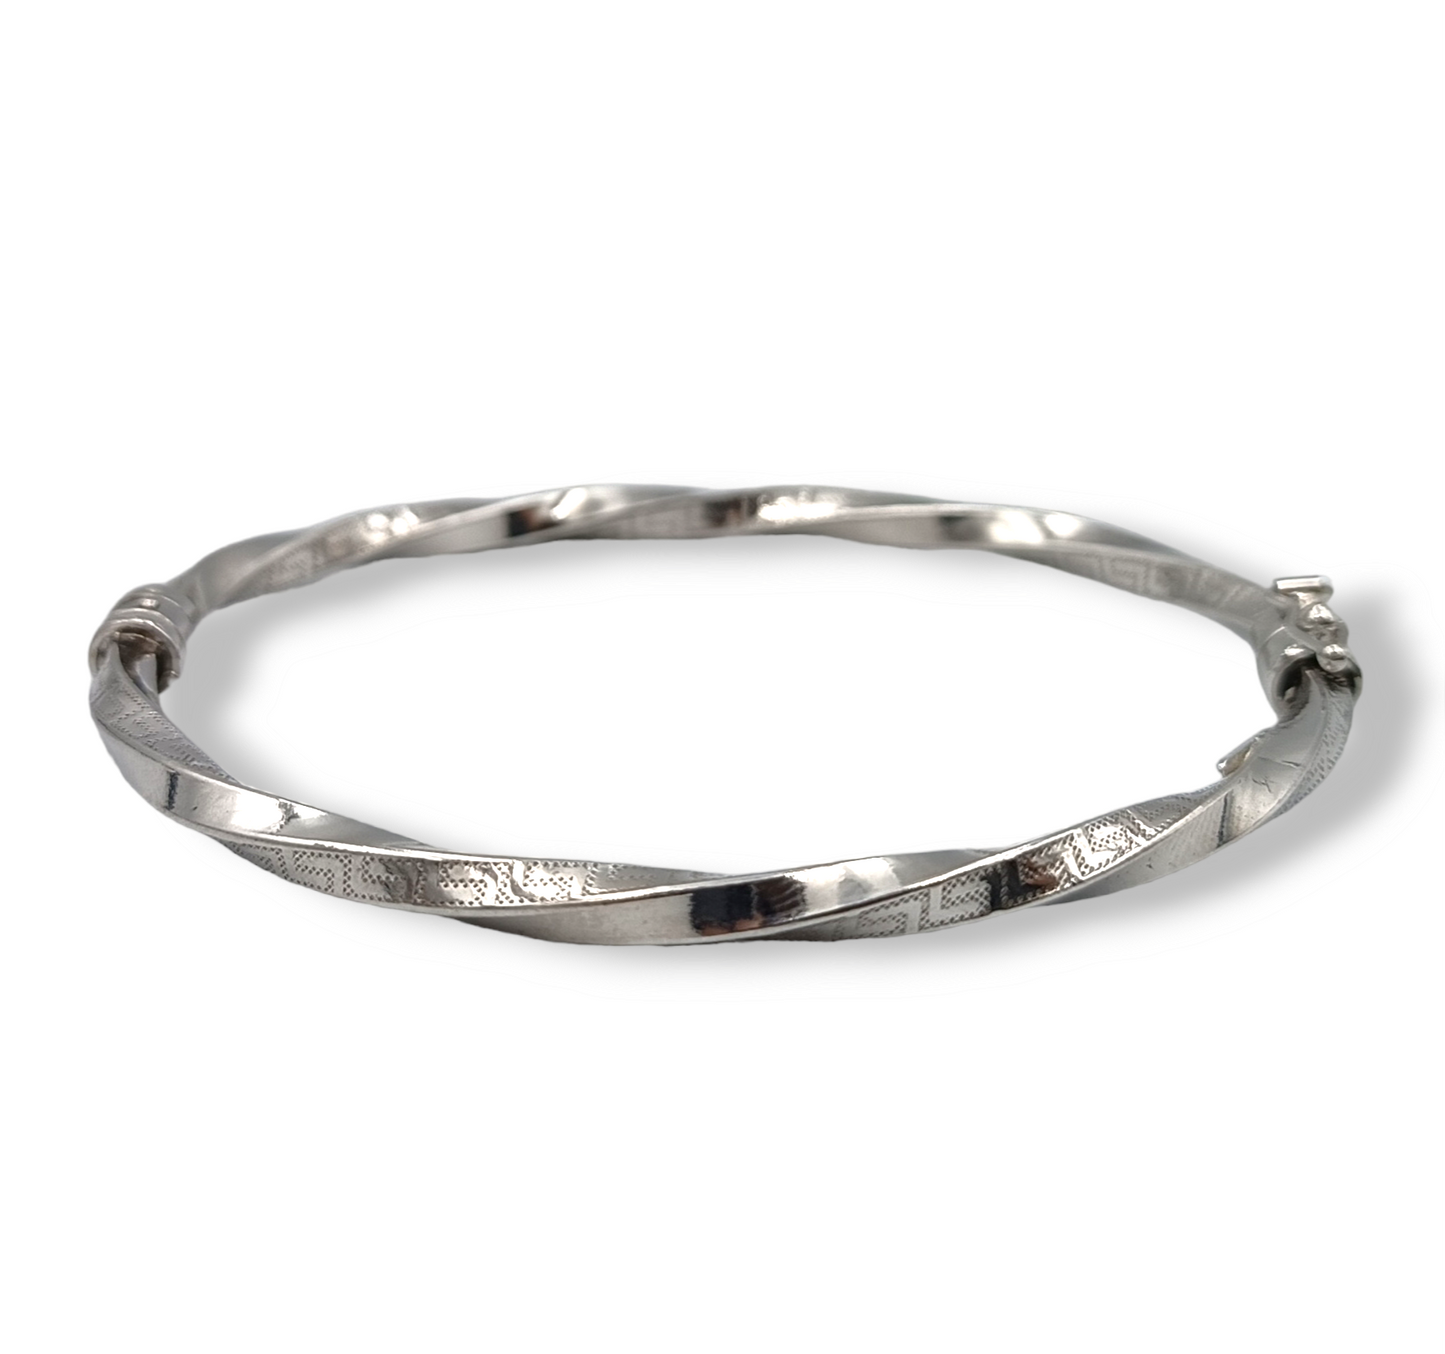 Silver Meander design cuff bracelet